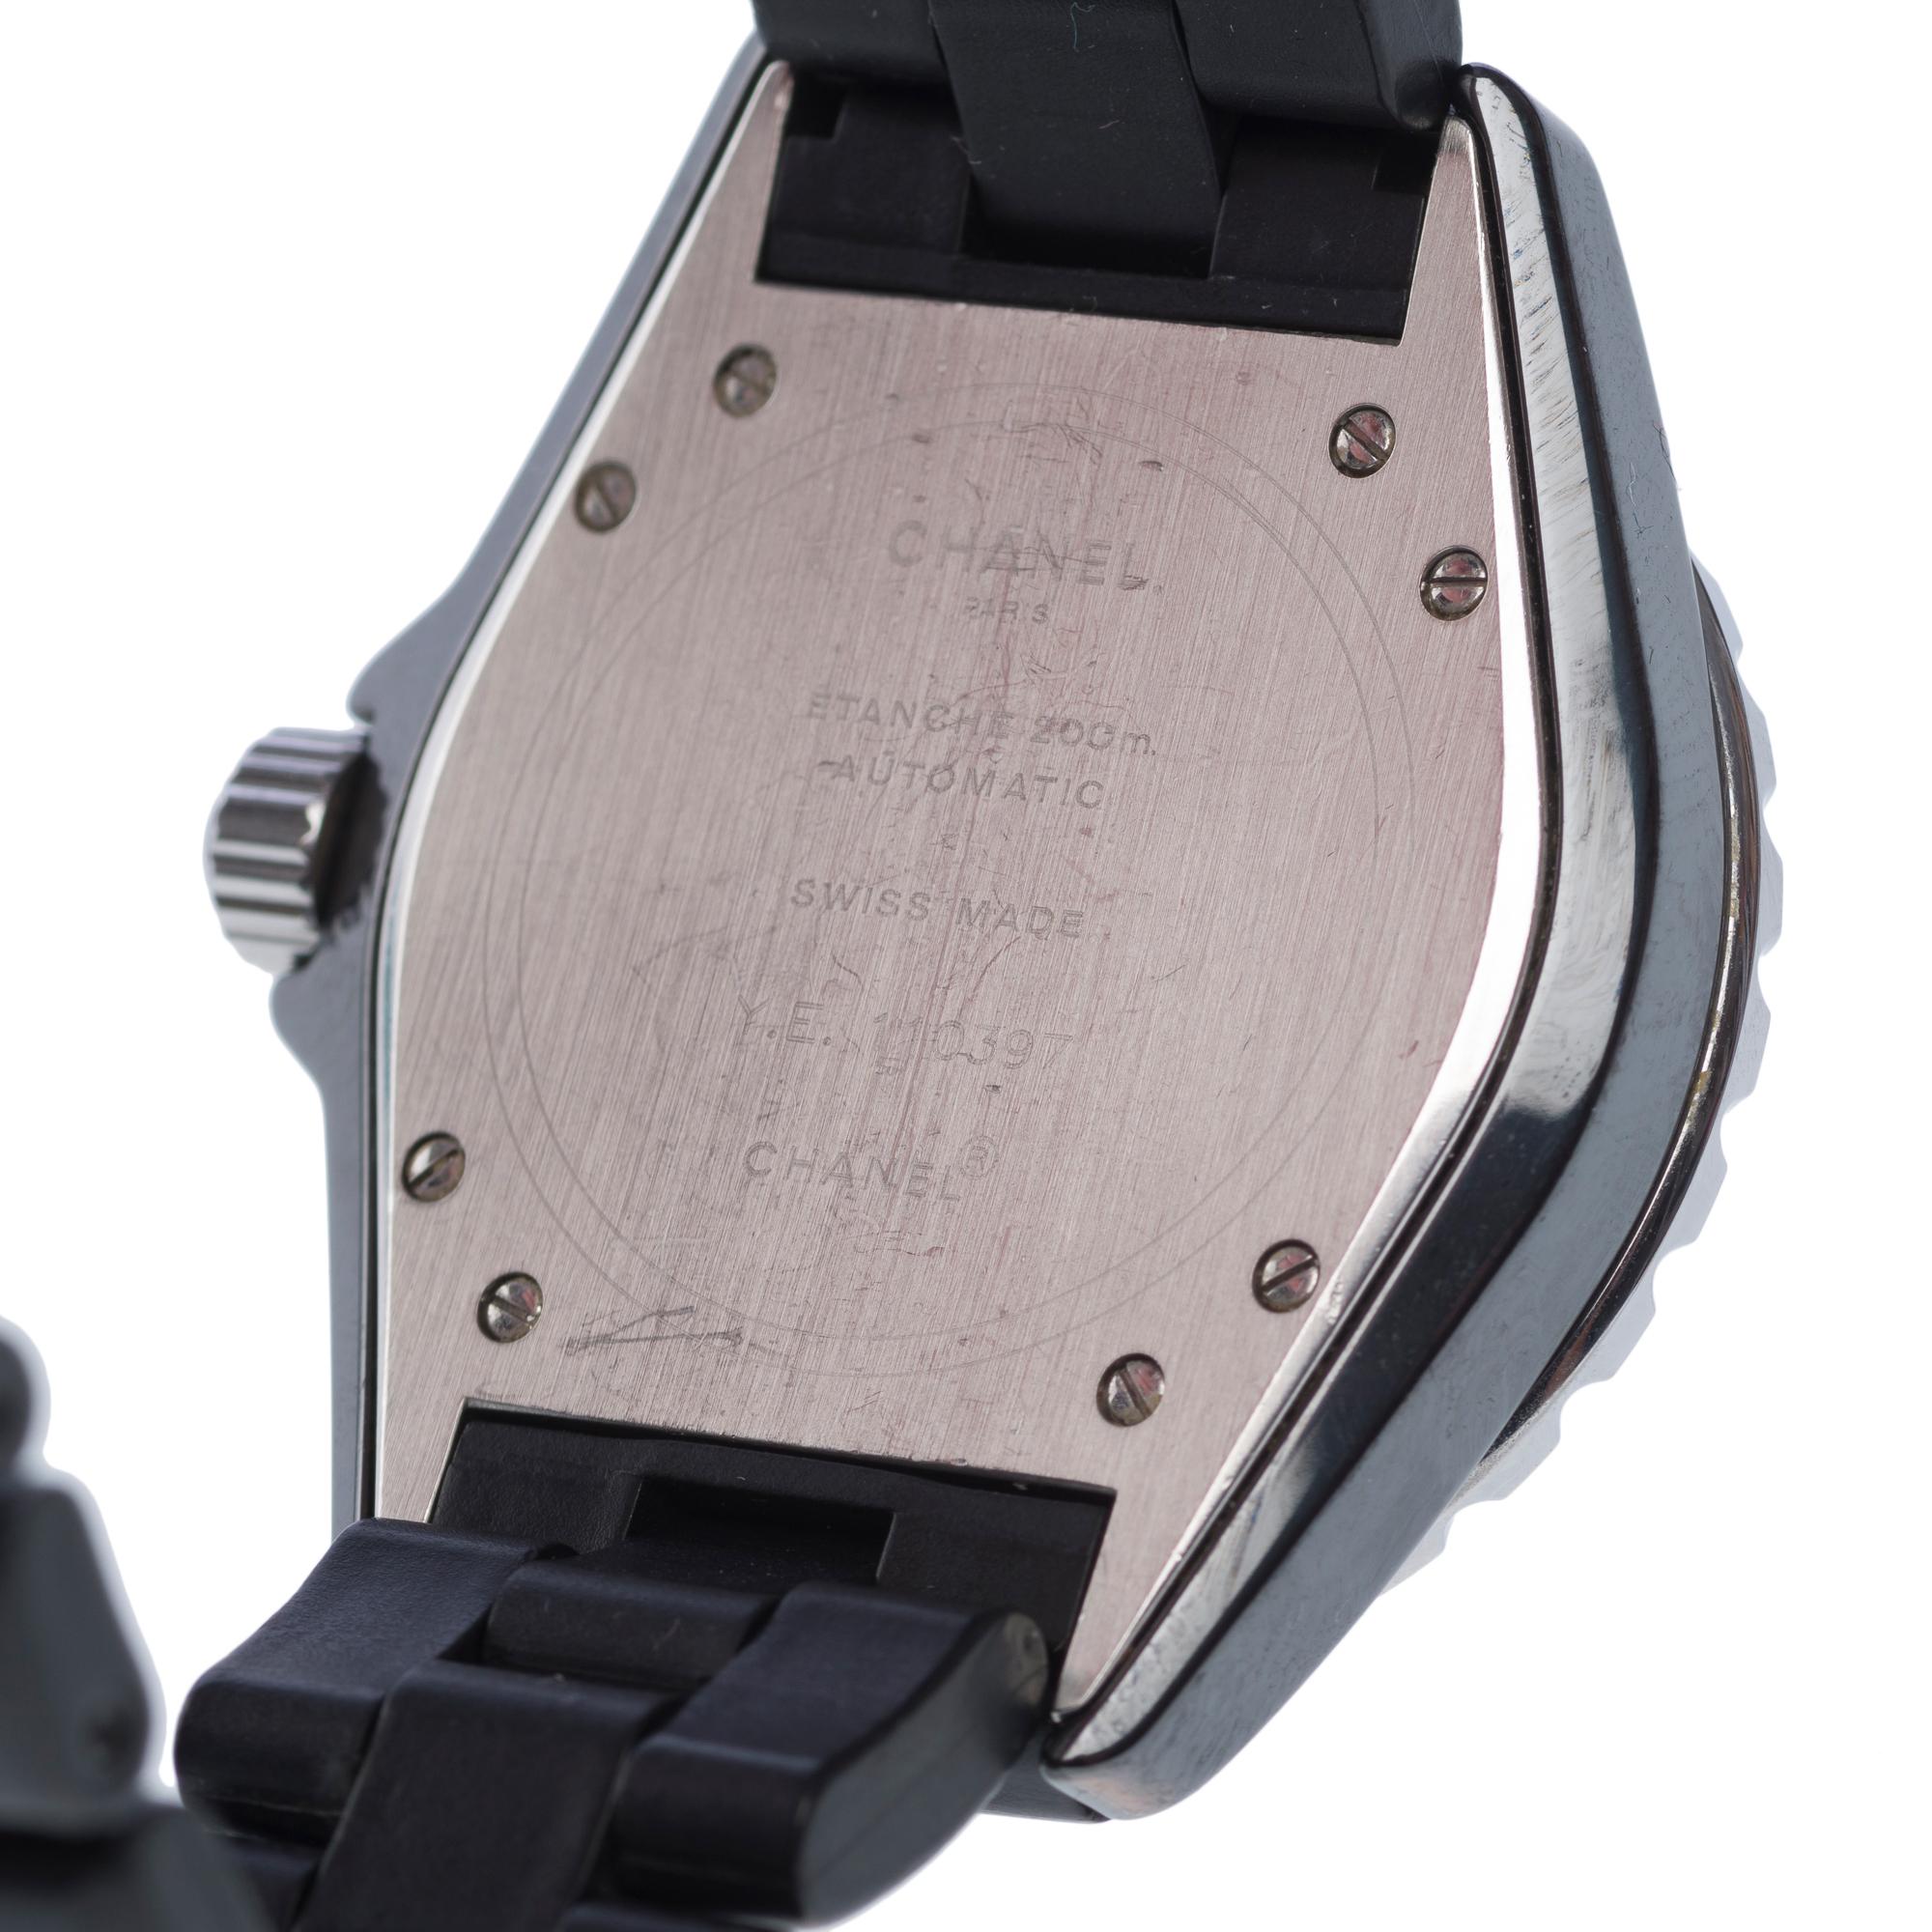 Gorgeous Chanel J12 automatic black ceramic wristwatch 1